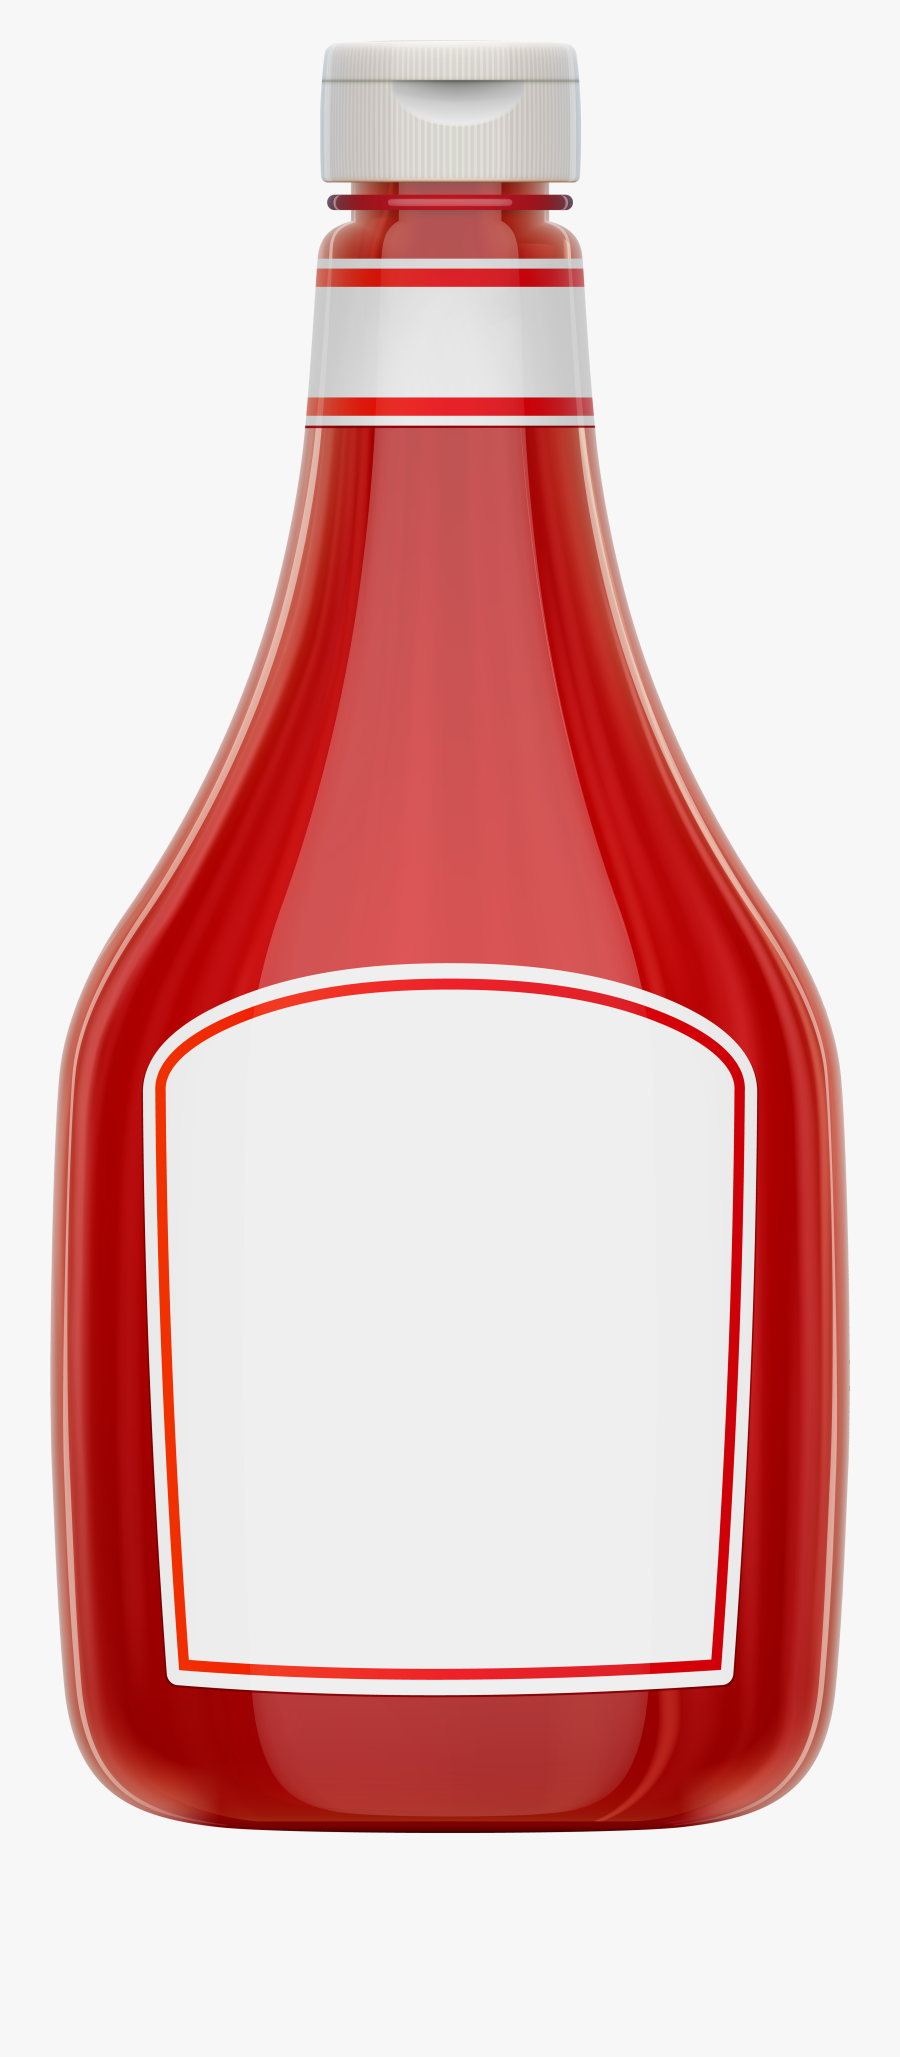 Transparent Image Gallery Yopriceville - Transparent Background Ketchup Clipart, Transparent Clipart